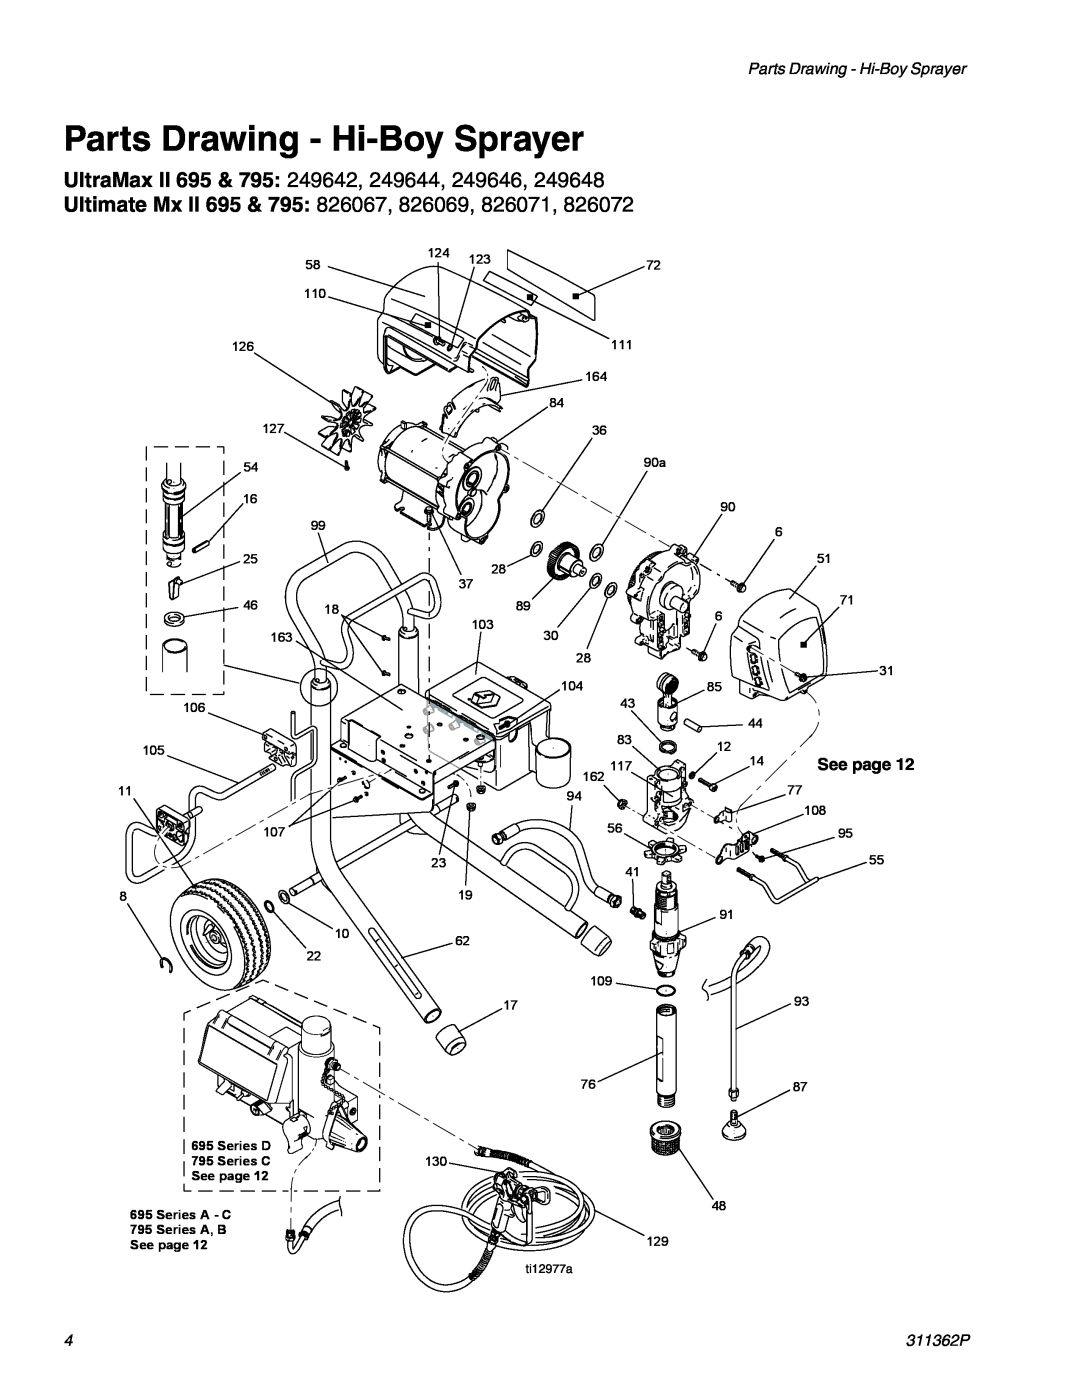 Graco Inc 1095, 1595 Parts Drawing - Hi-Boy Sprayer, UltraMax II 695 & 795 249642, 249644, 249646, See page, Series A - C 